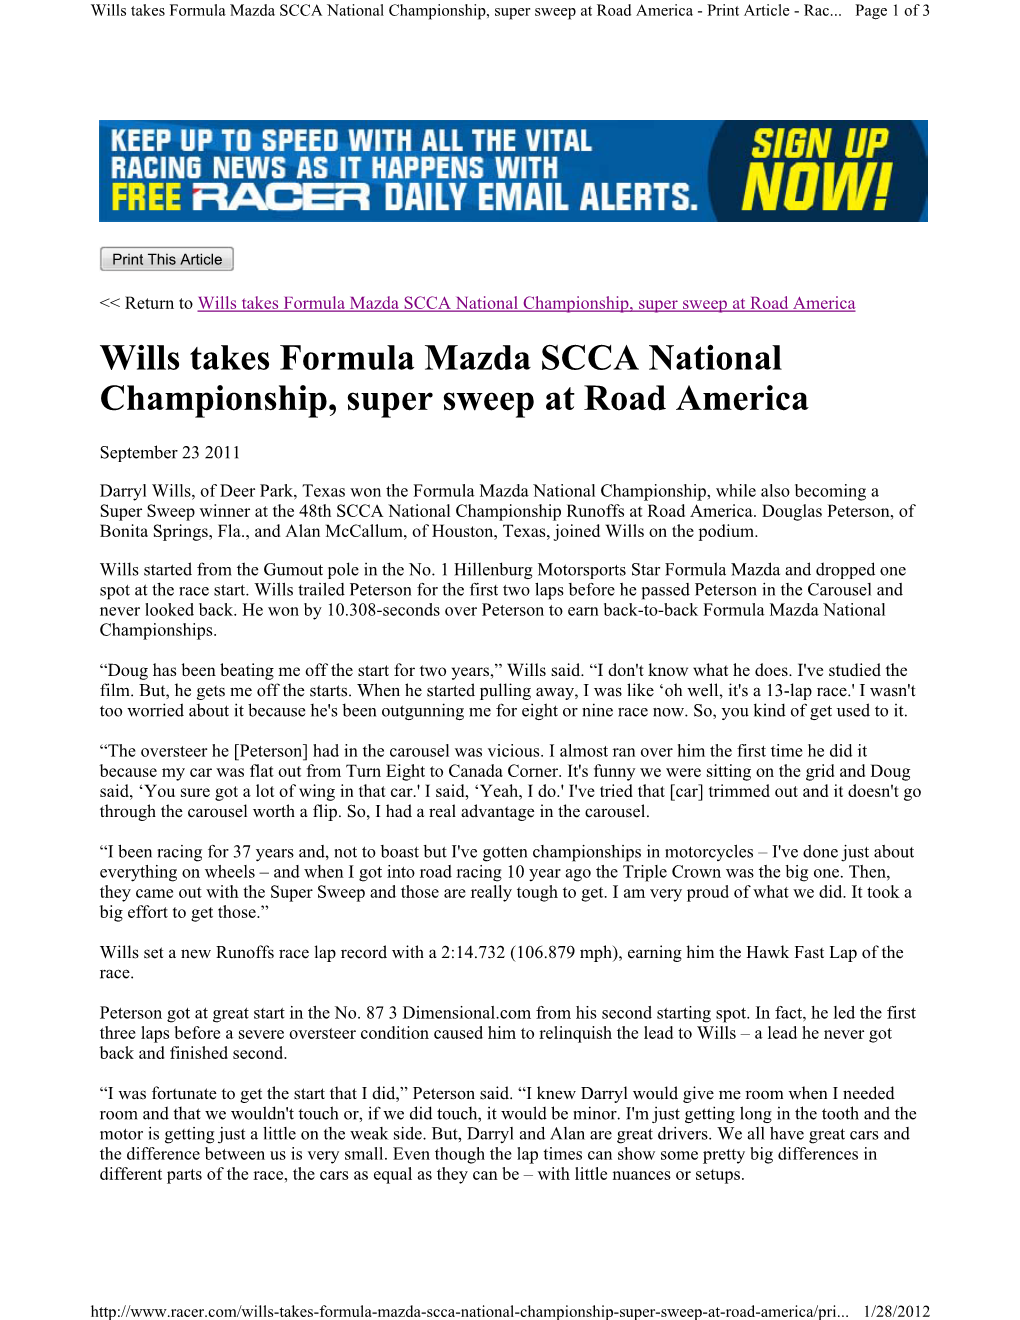 Wills Takes Formula Mazda SCCA National Championship, Super Sweep at Road America - Print Article - Rac